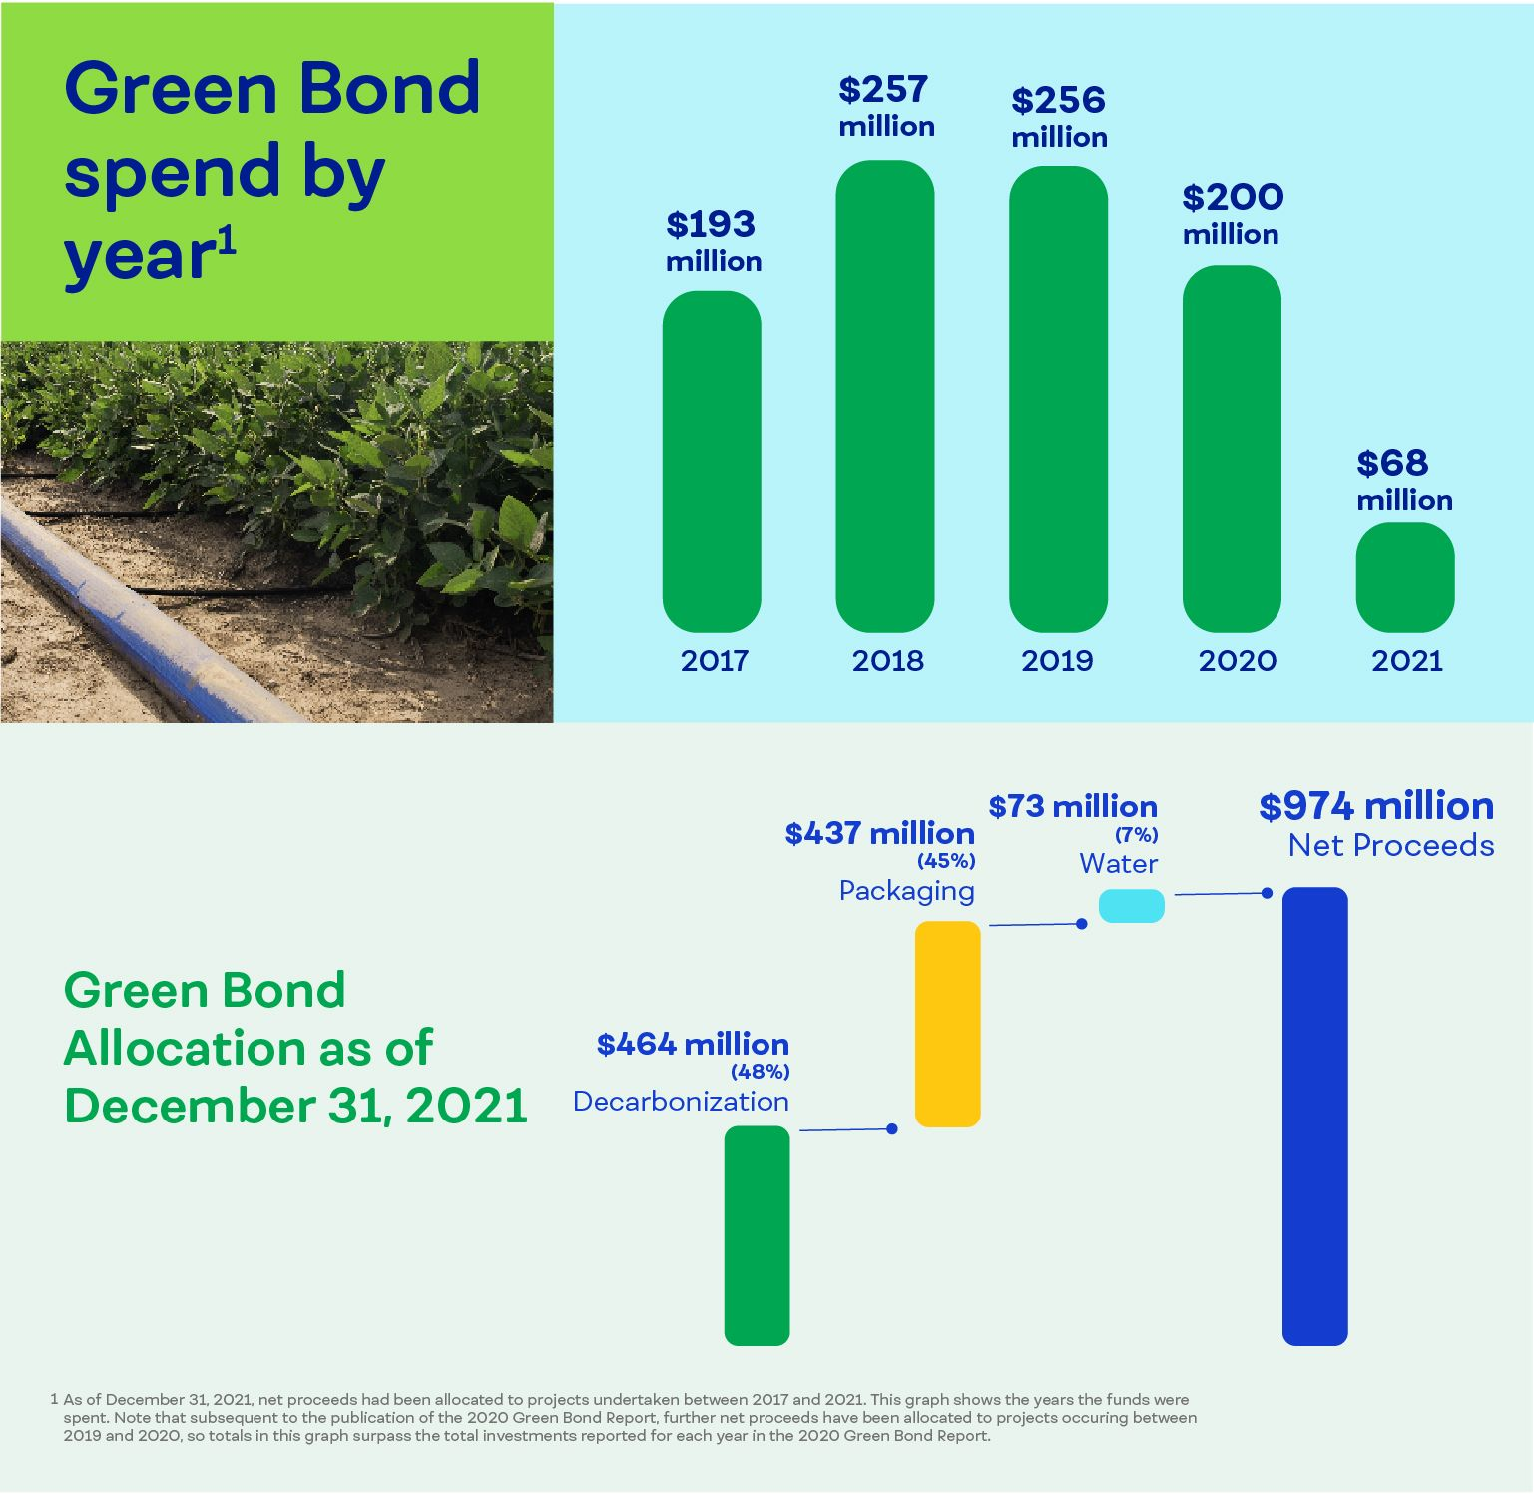 Green Bond spend by year (in millions): $193 in 2017; $257 in 2018; $256 in 2019; $200 in 2020; $68 in 2021. Green Bond Allocation as of December 31, 2021 (in millions): $464 in Decarbonization; $437 in Packaging; $73 in Water; $974 in Net Proceeds.